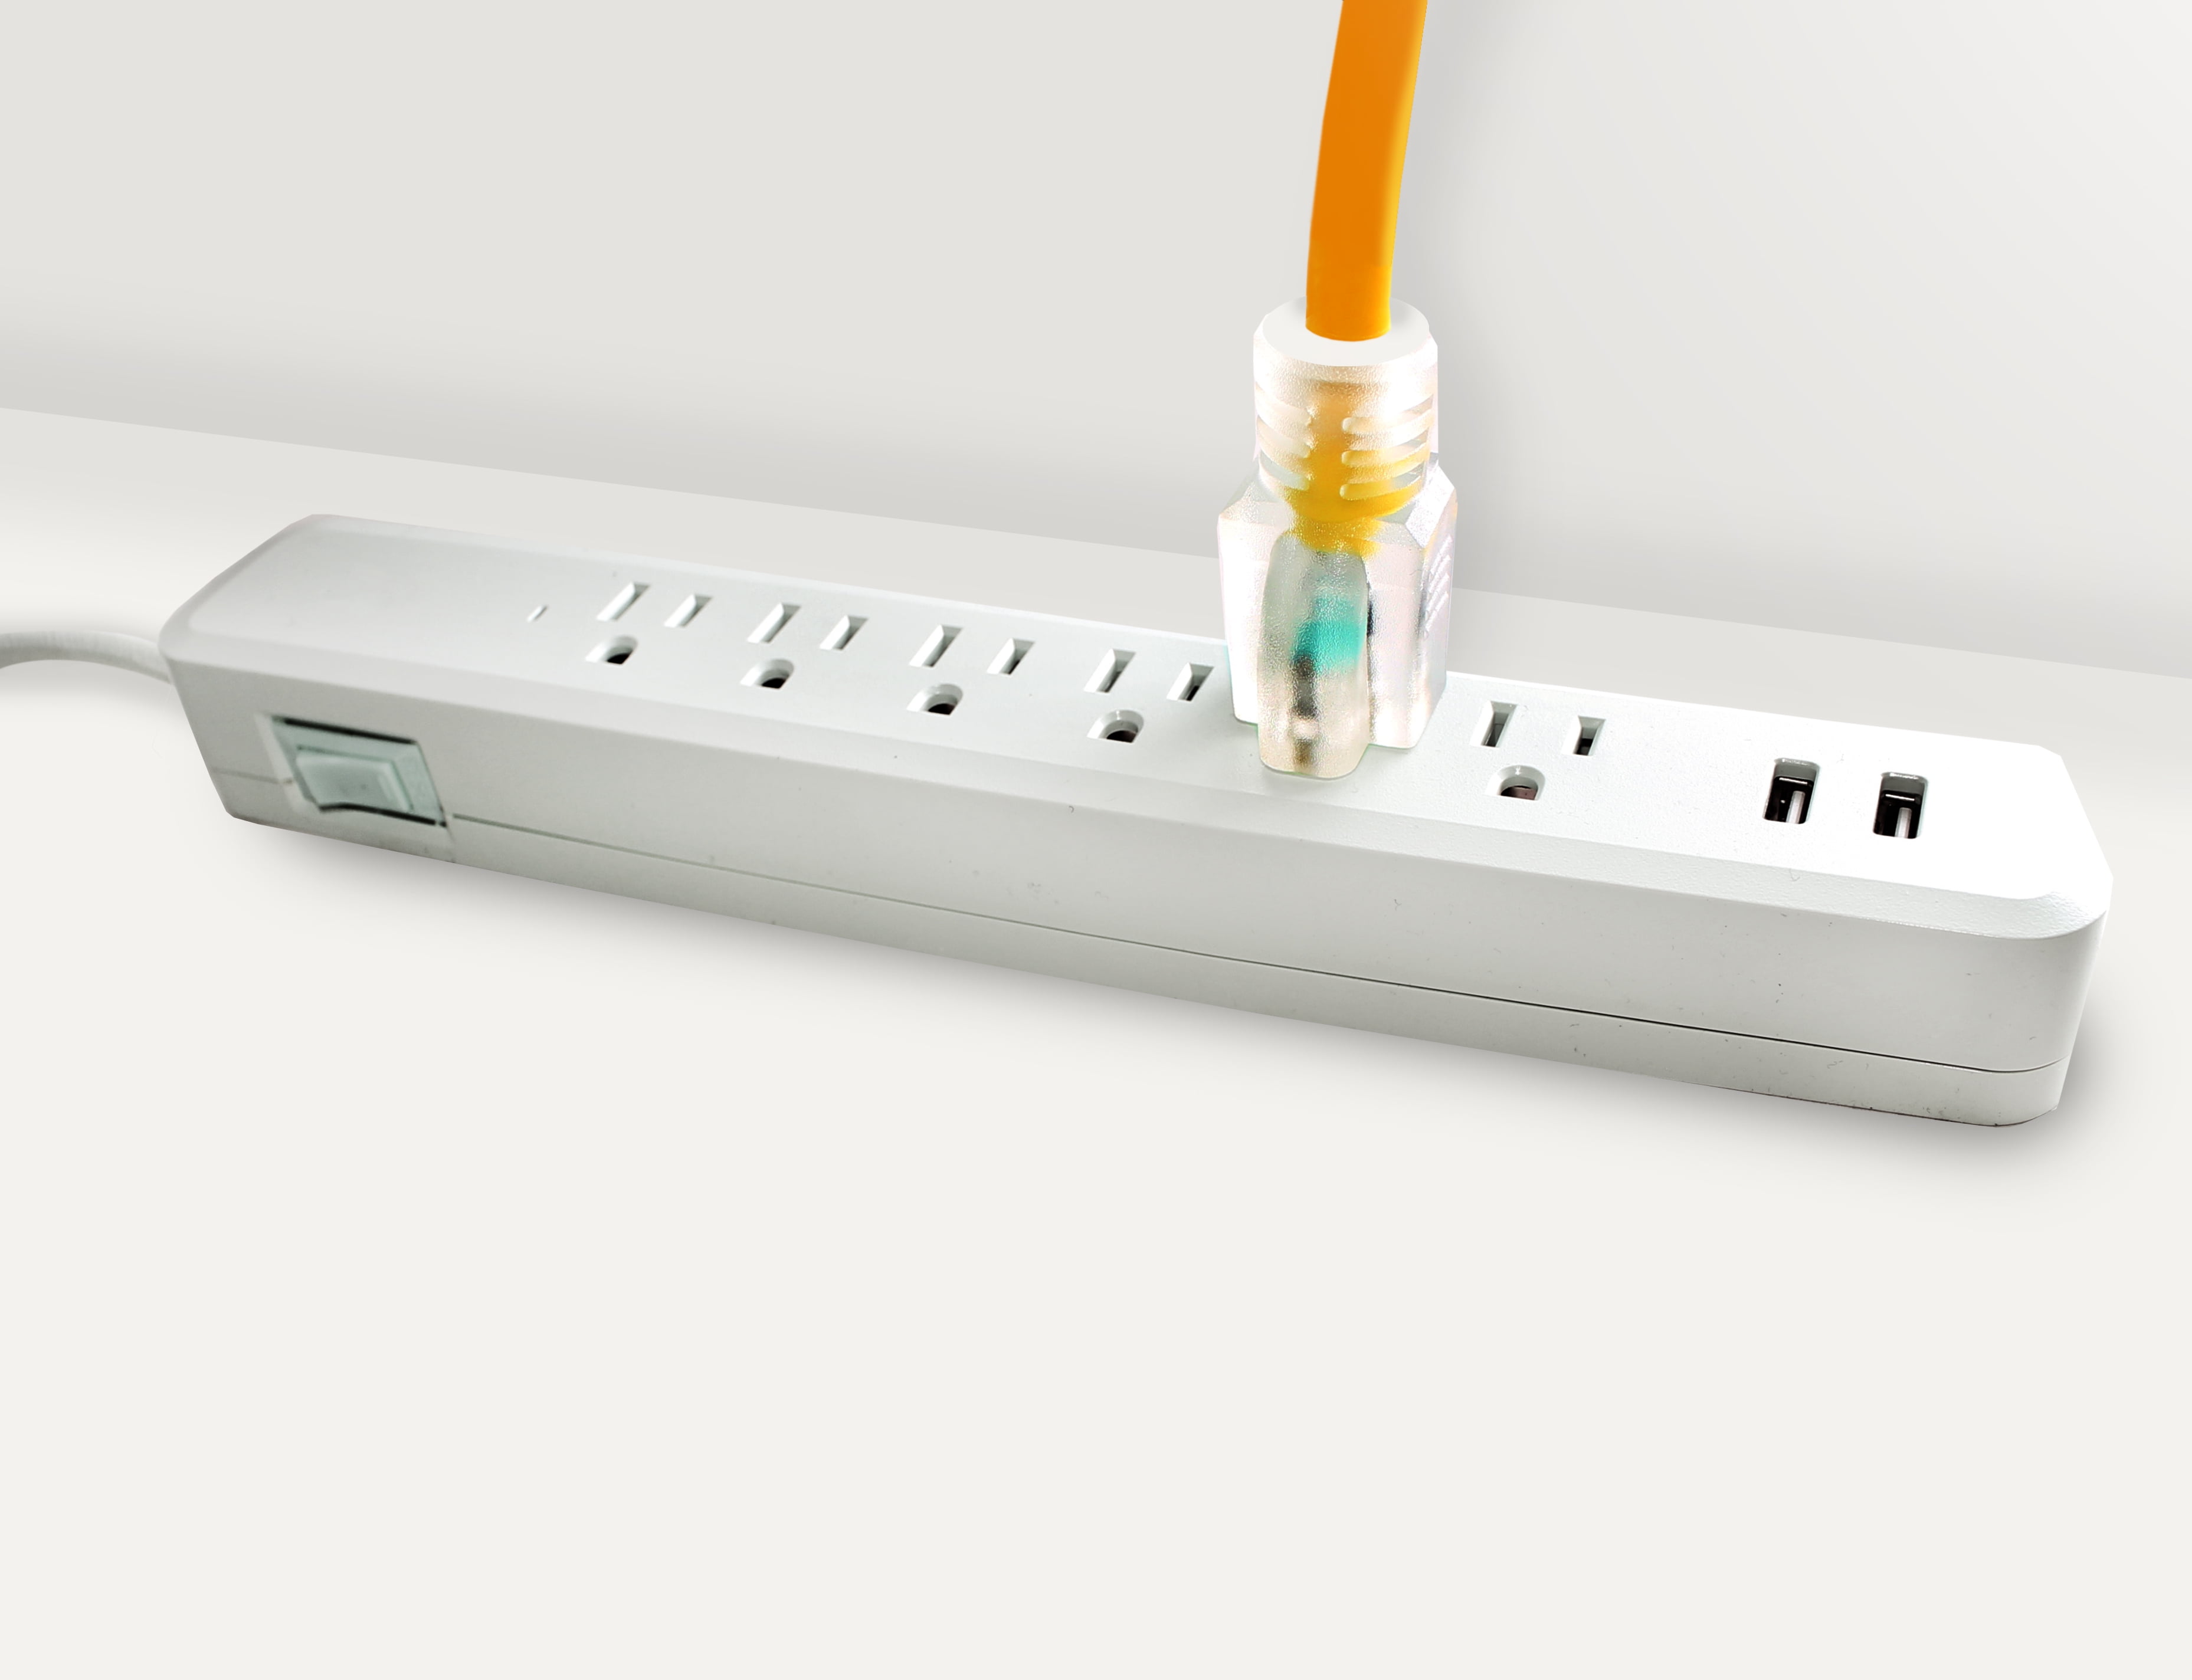 LifeSupplyUSA Power Extension Cord Outdoor/Indoor 12 Gauge/3 Prong 15 Amp  ft, Orange, Pack